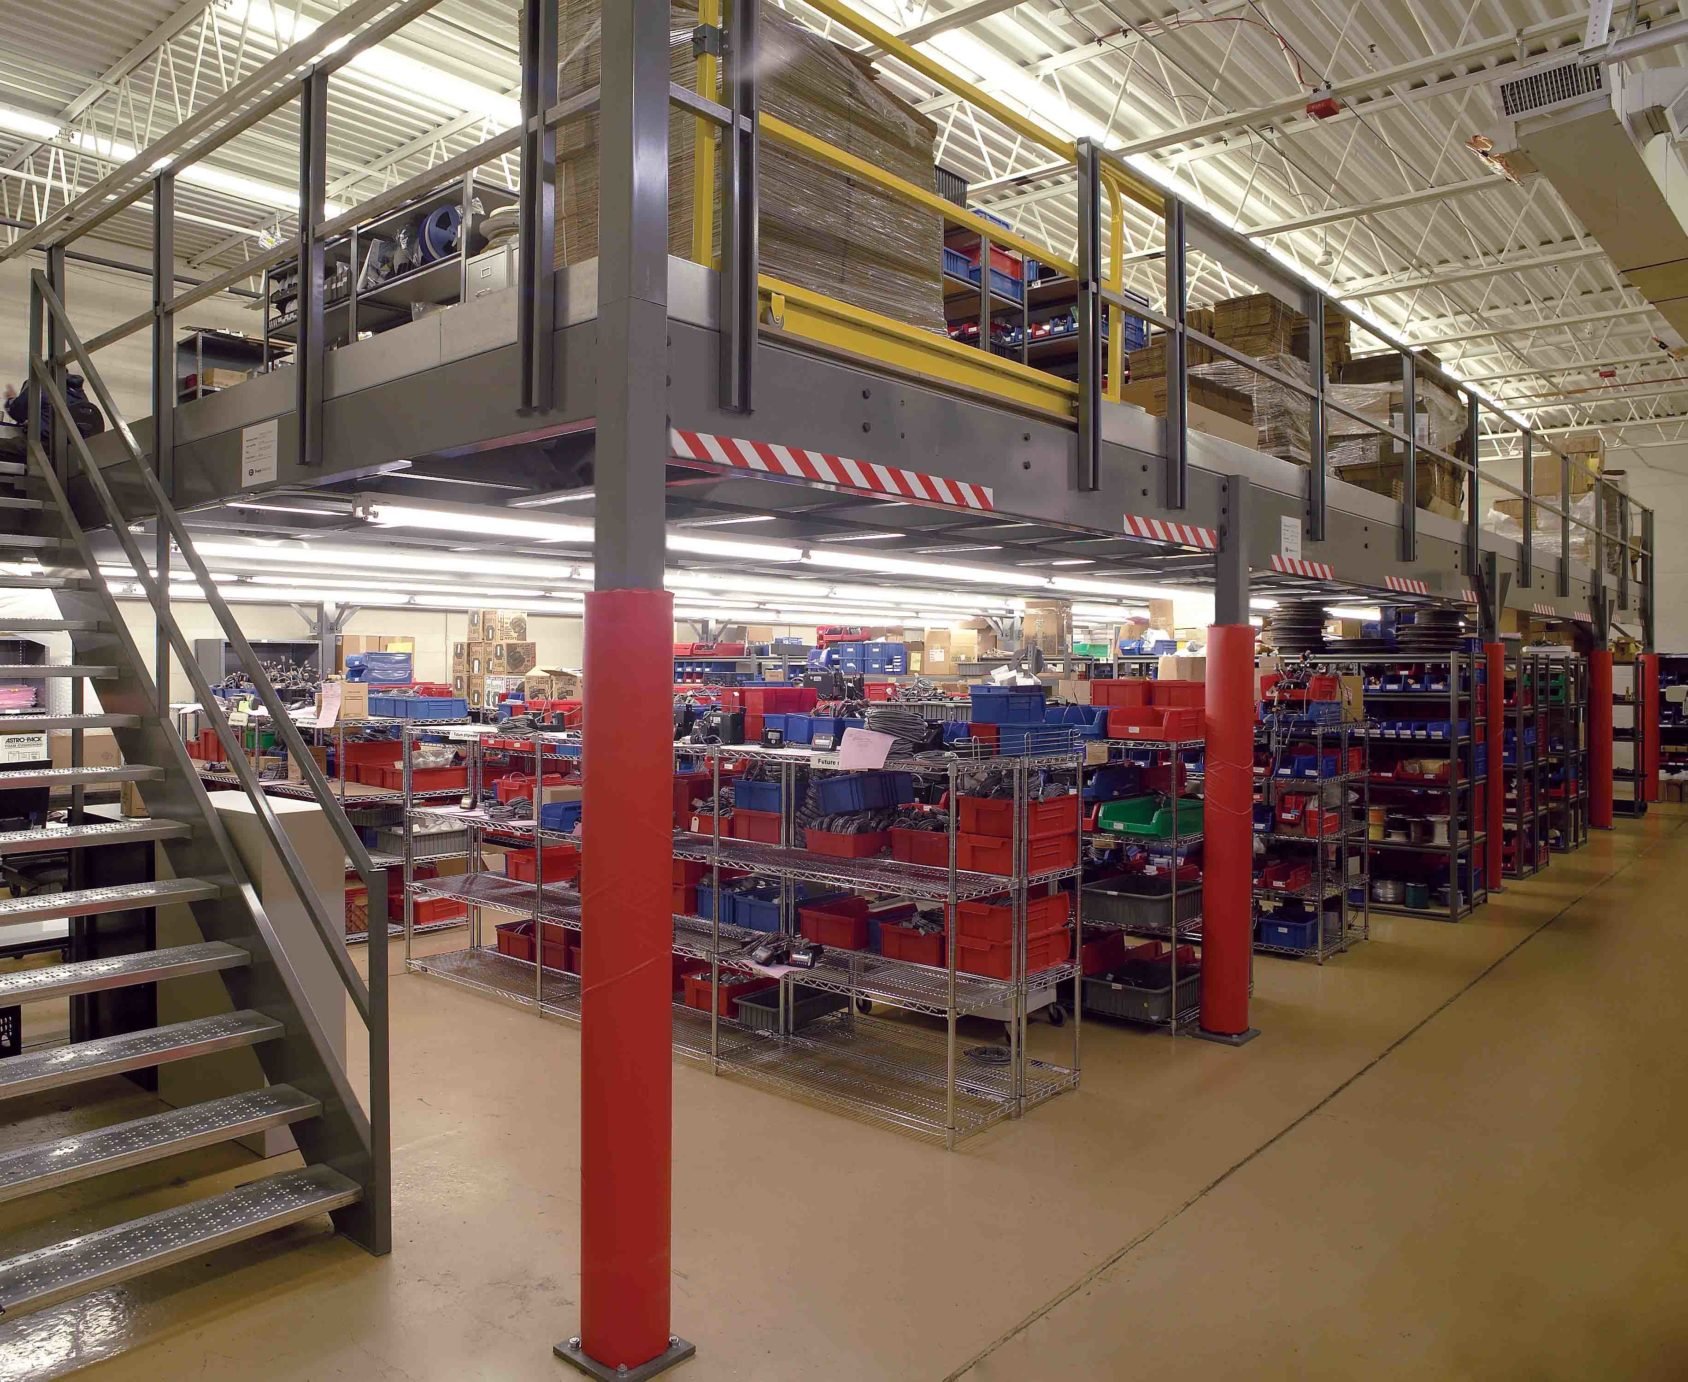 ABCO Systems mezzanine warehouse design with storage